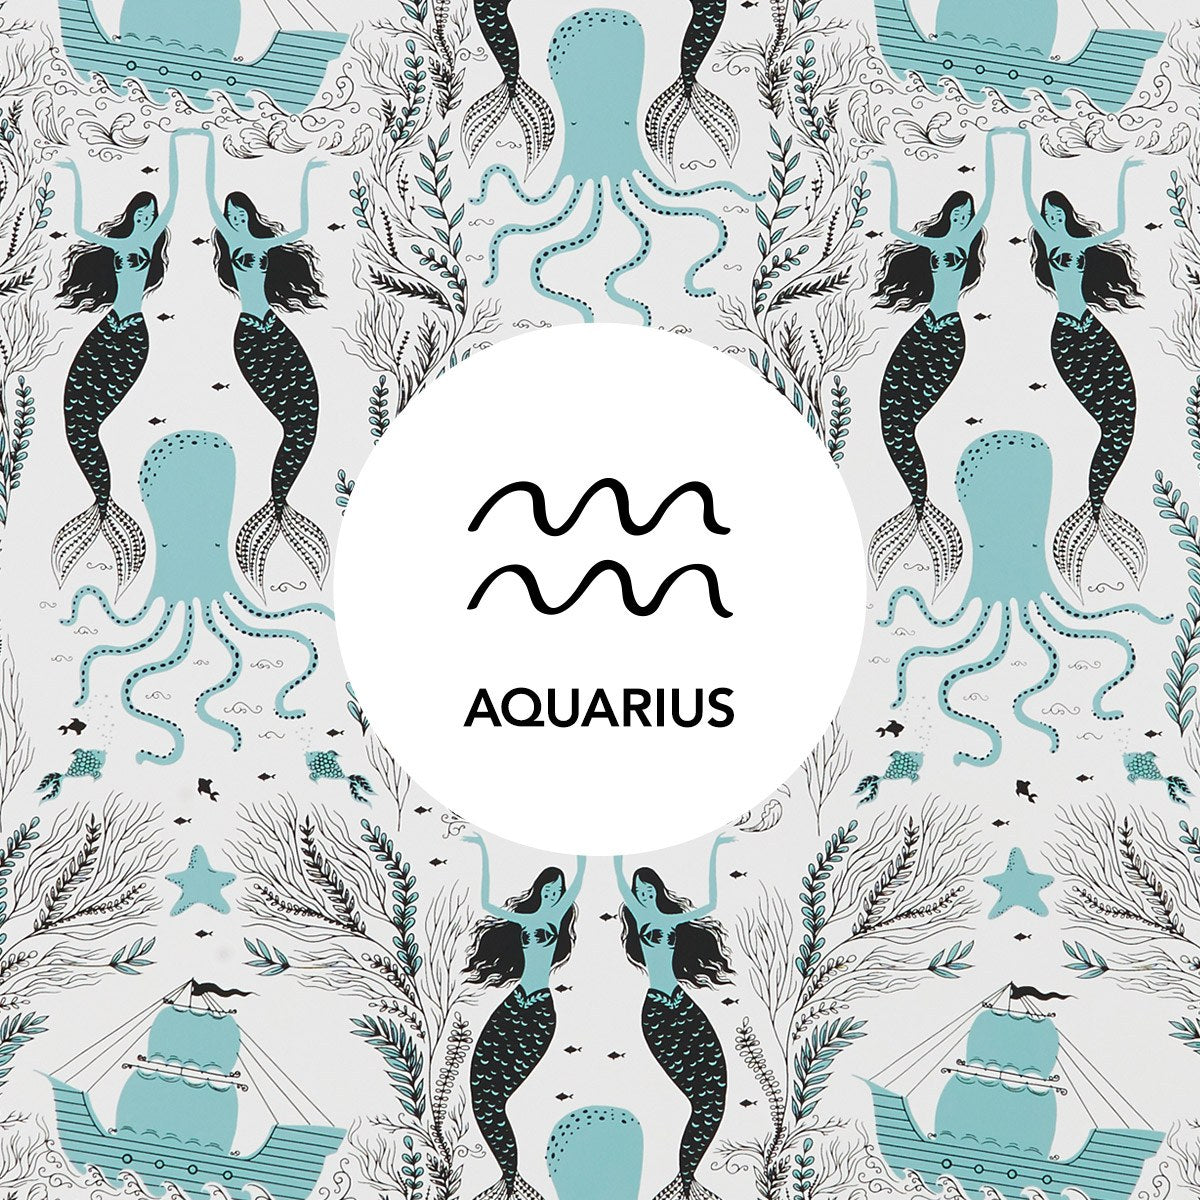 Aquarius | Mermaids Ocean wallpaper | Dinara Mirtalipova | Hygge & West